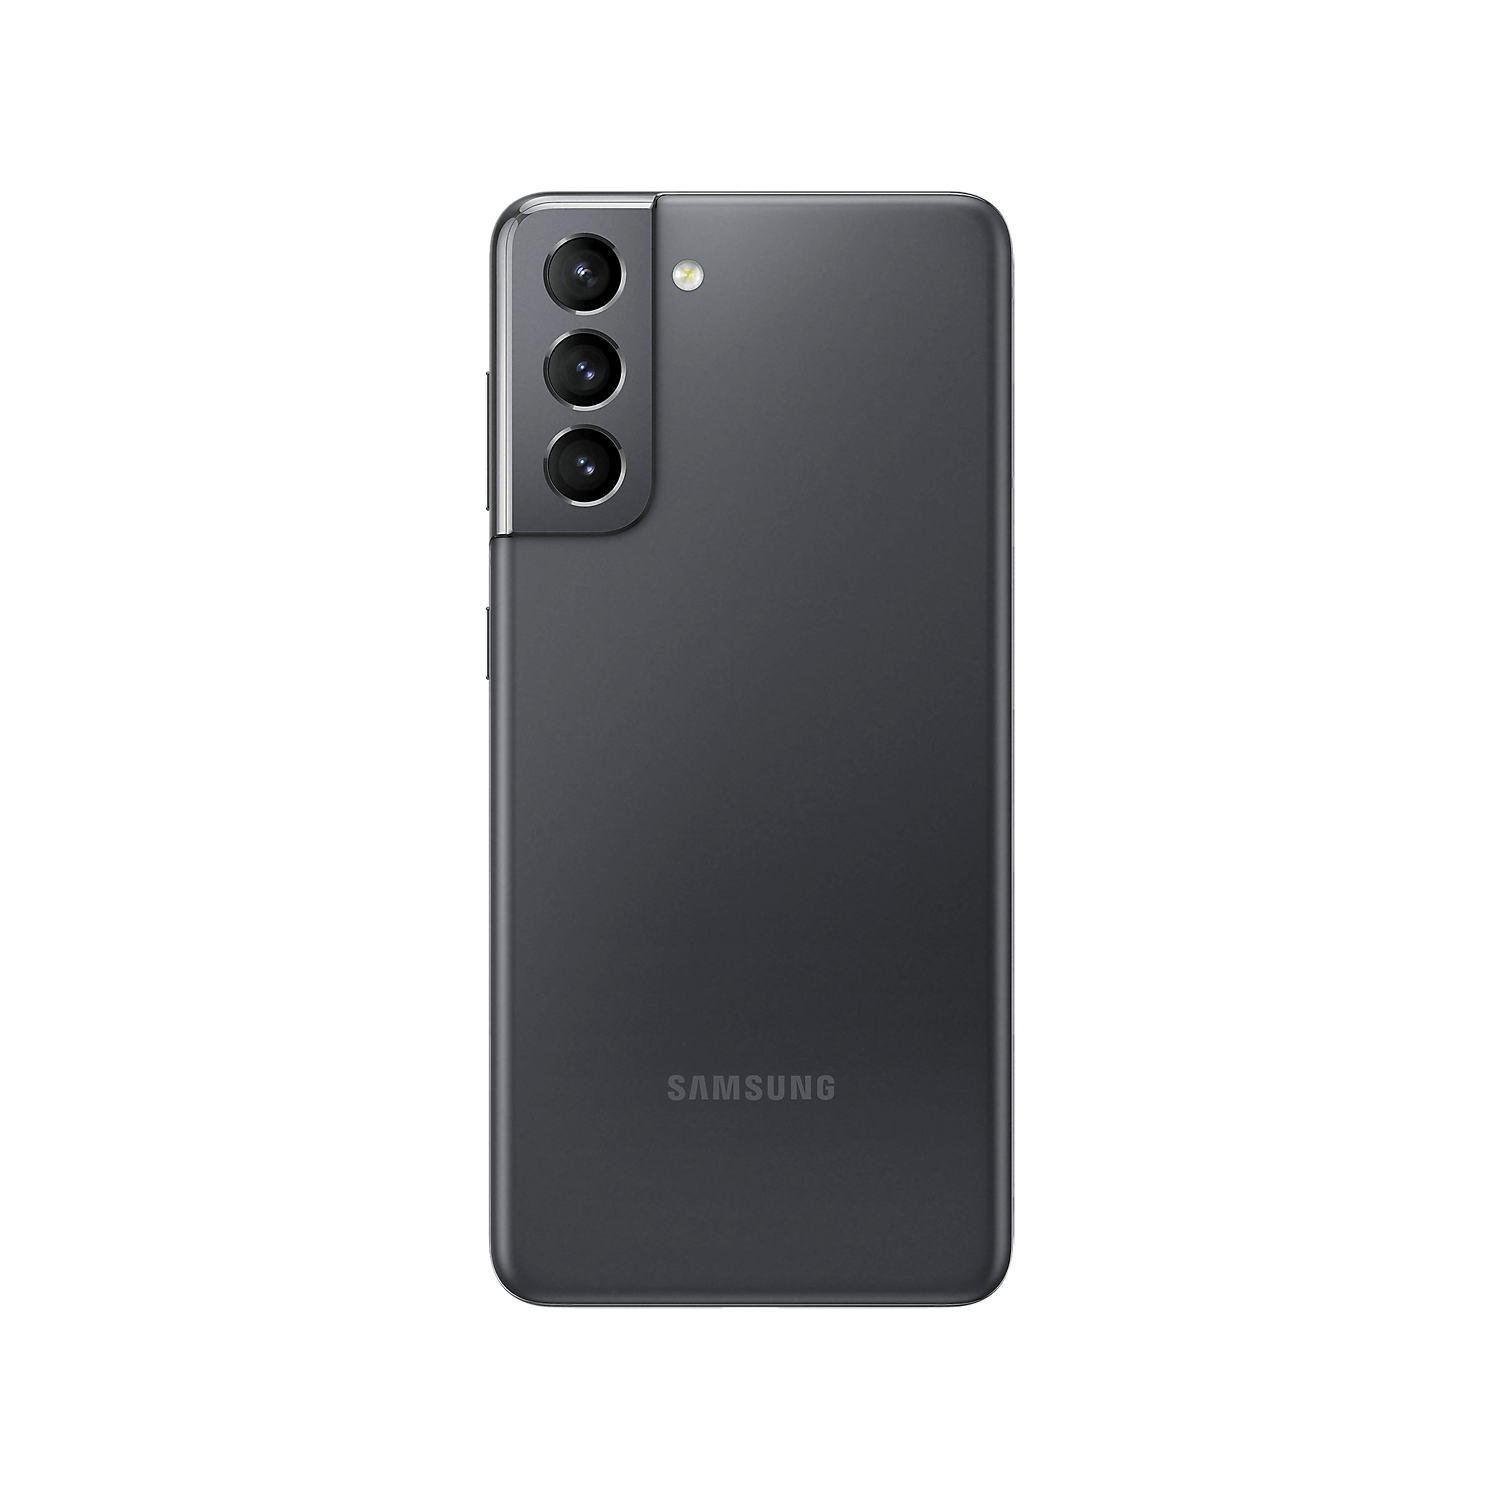 Samsung Galaxy S21 5G 128GB Phantom Grey - Unlocked - Good Condition